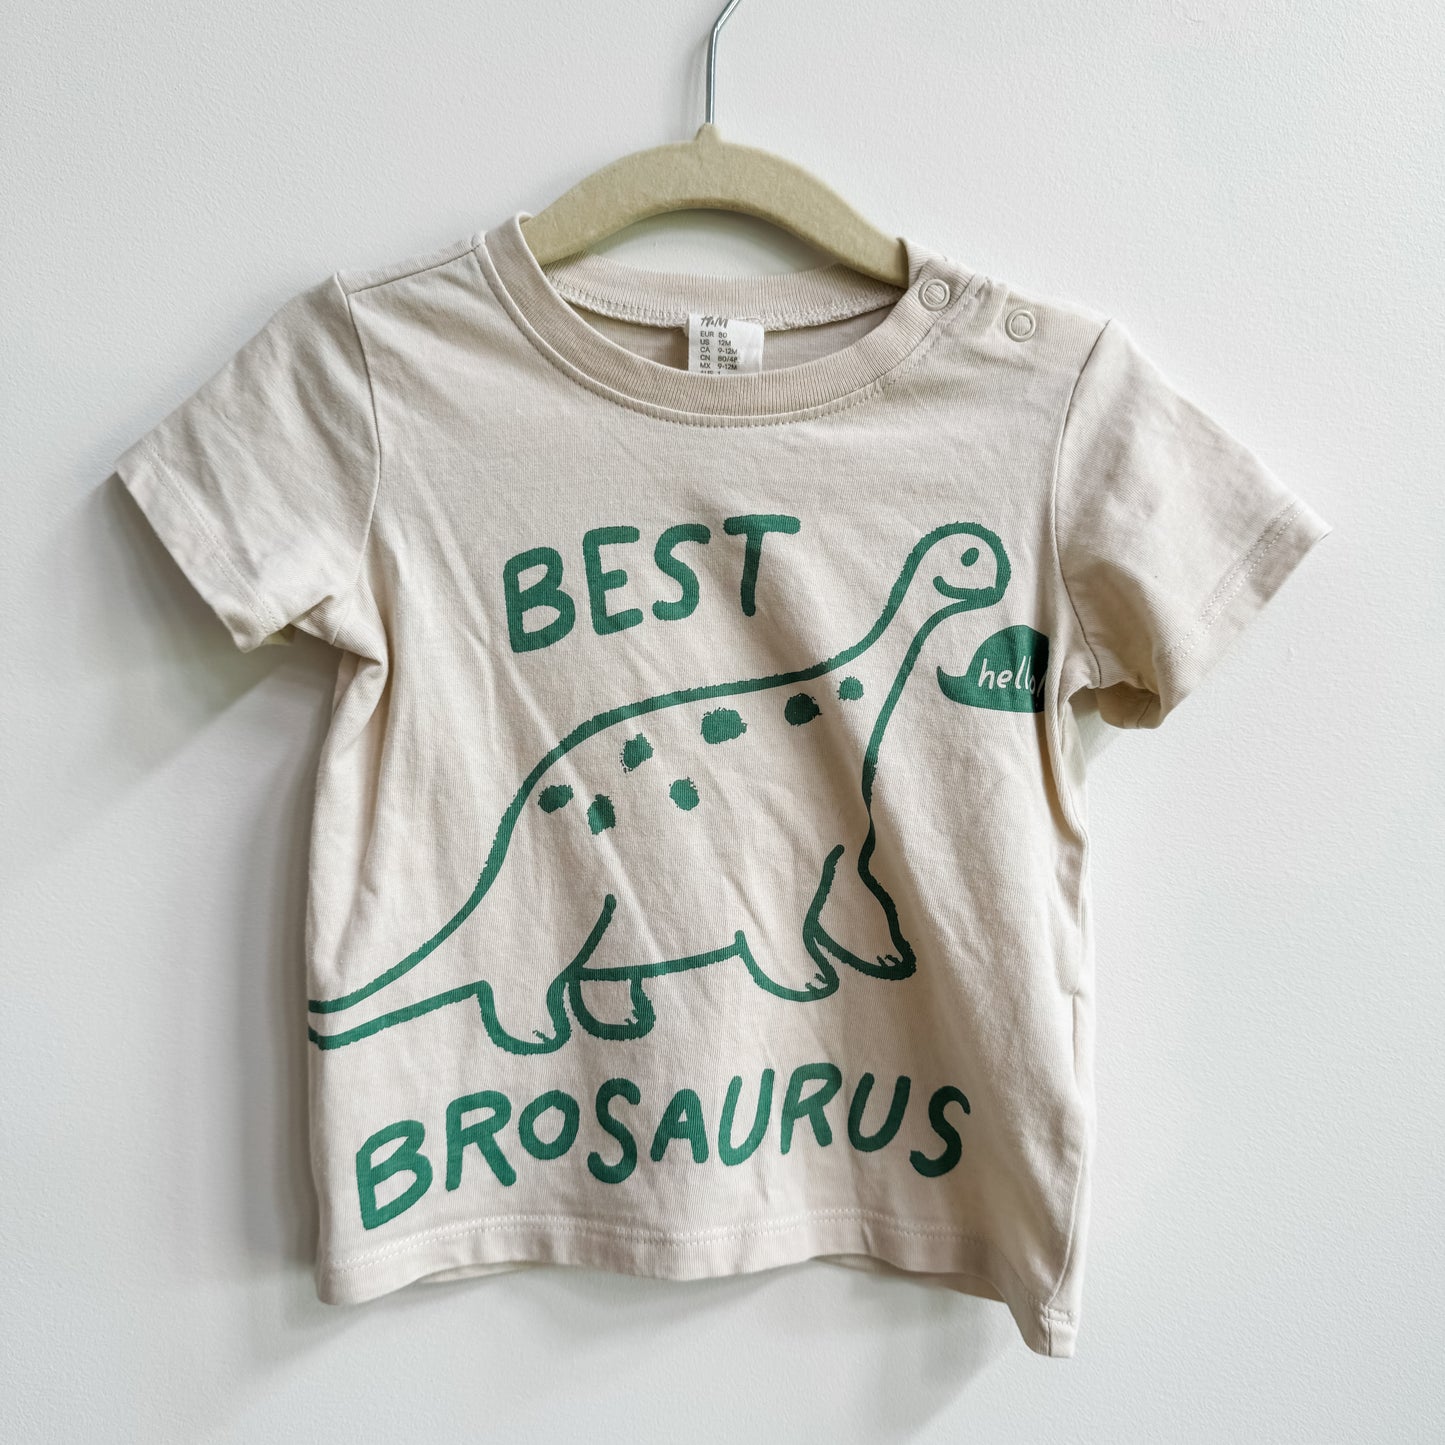 H&M Best Brosaurus T-Shirt (9-12m)